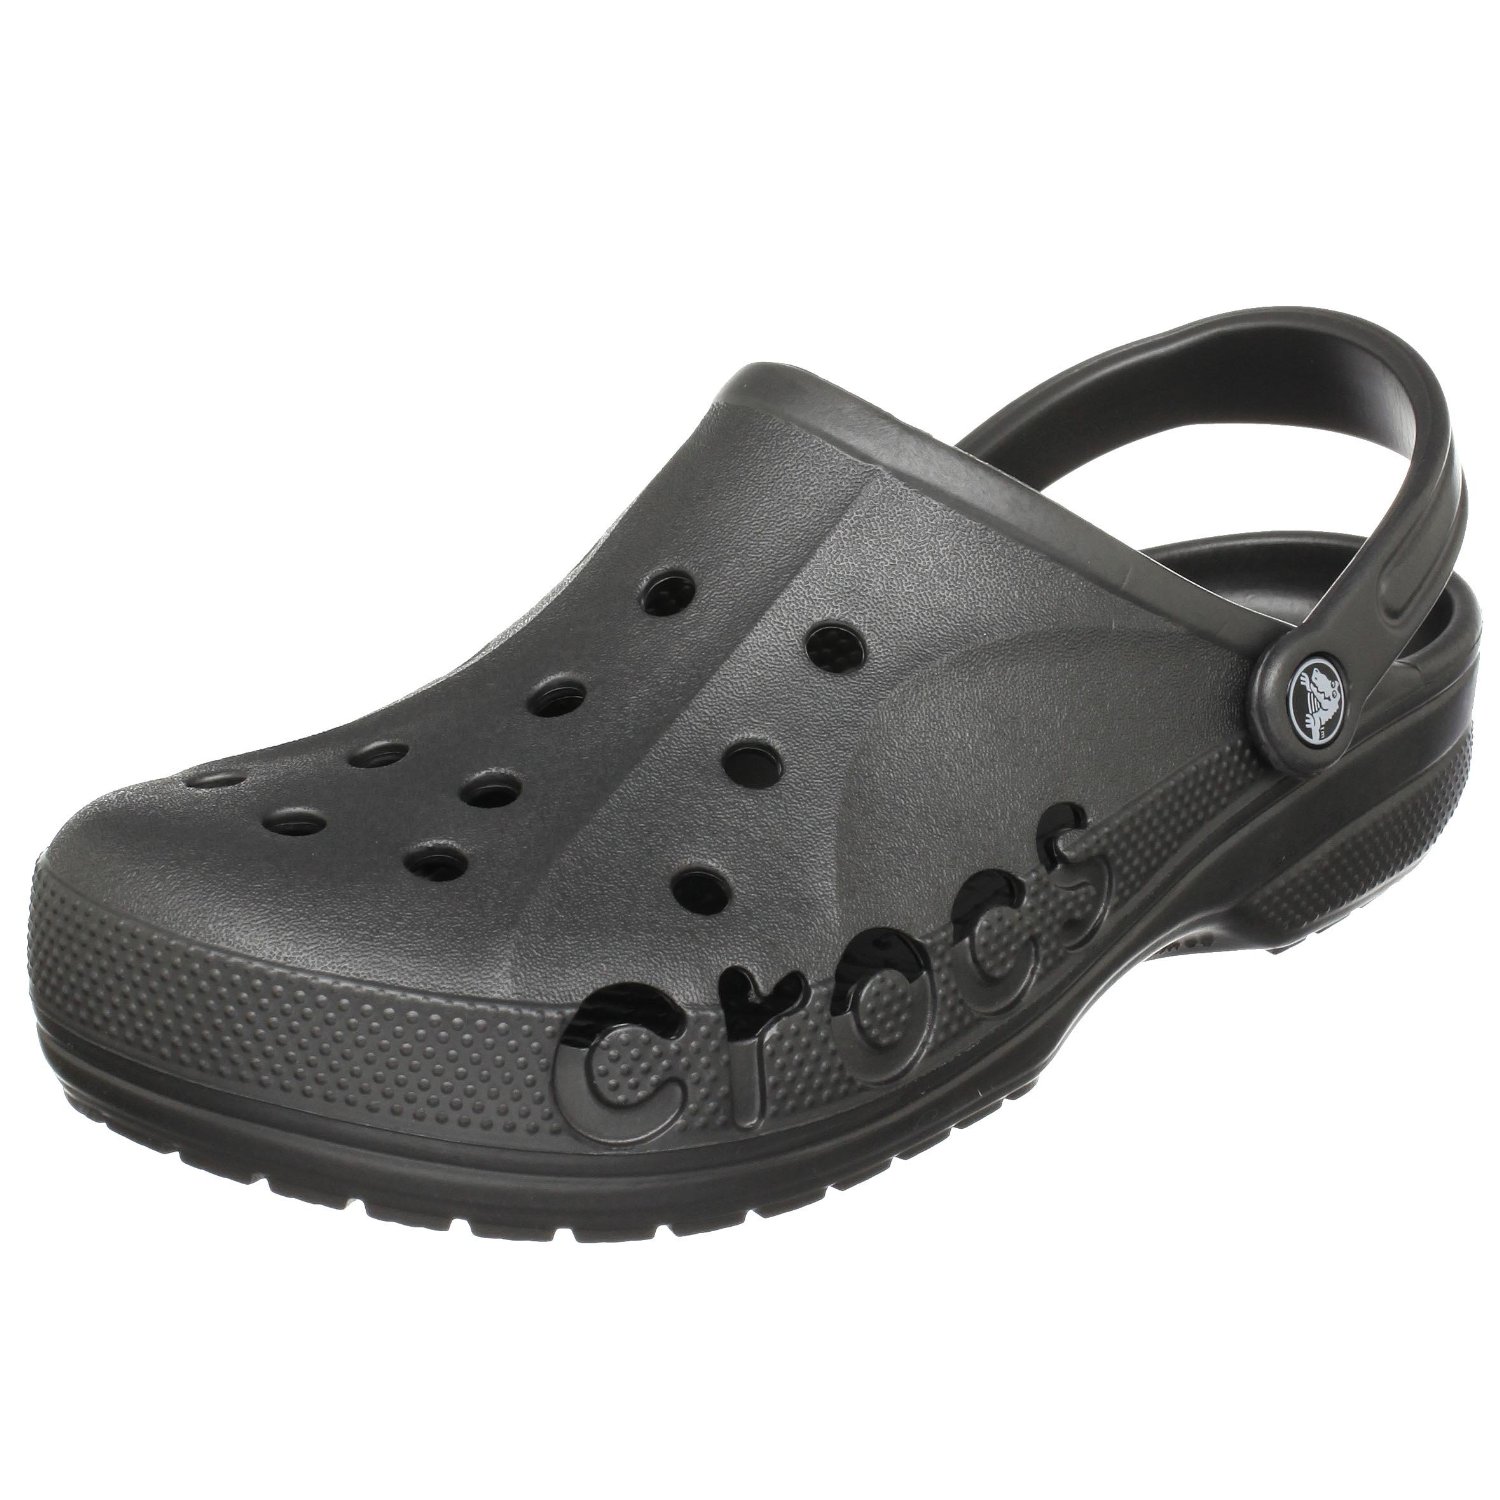 Crocs Shoes Women: July 2011